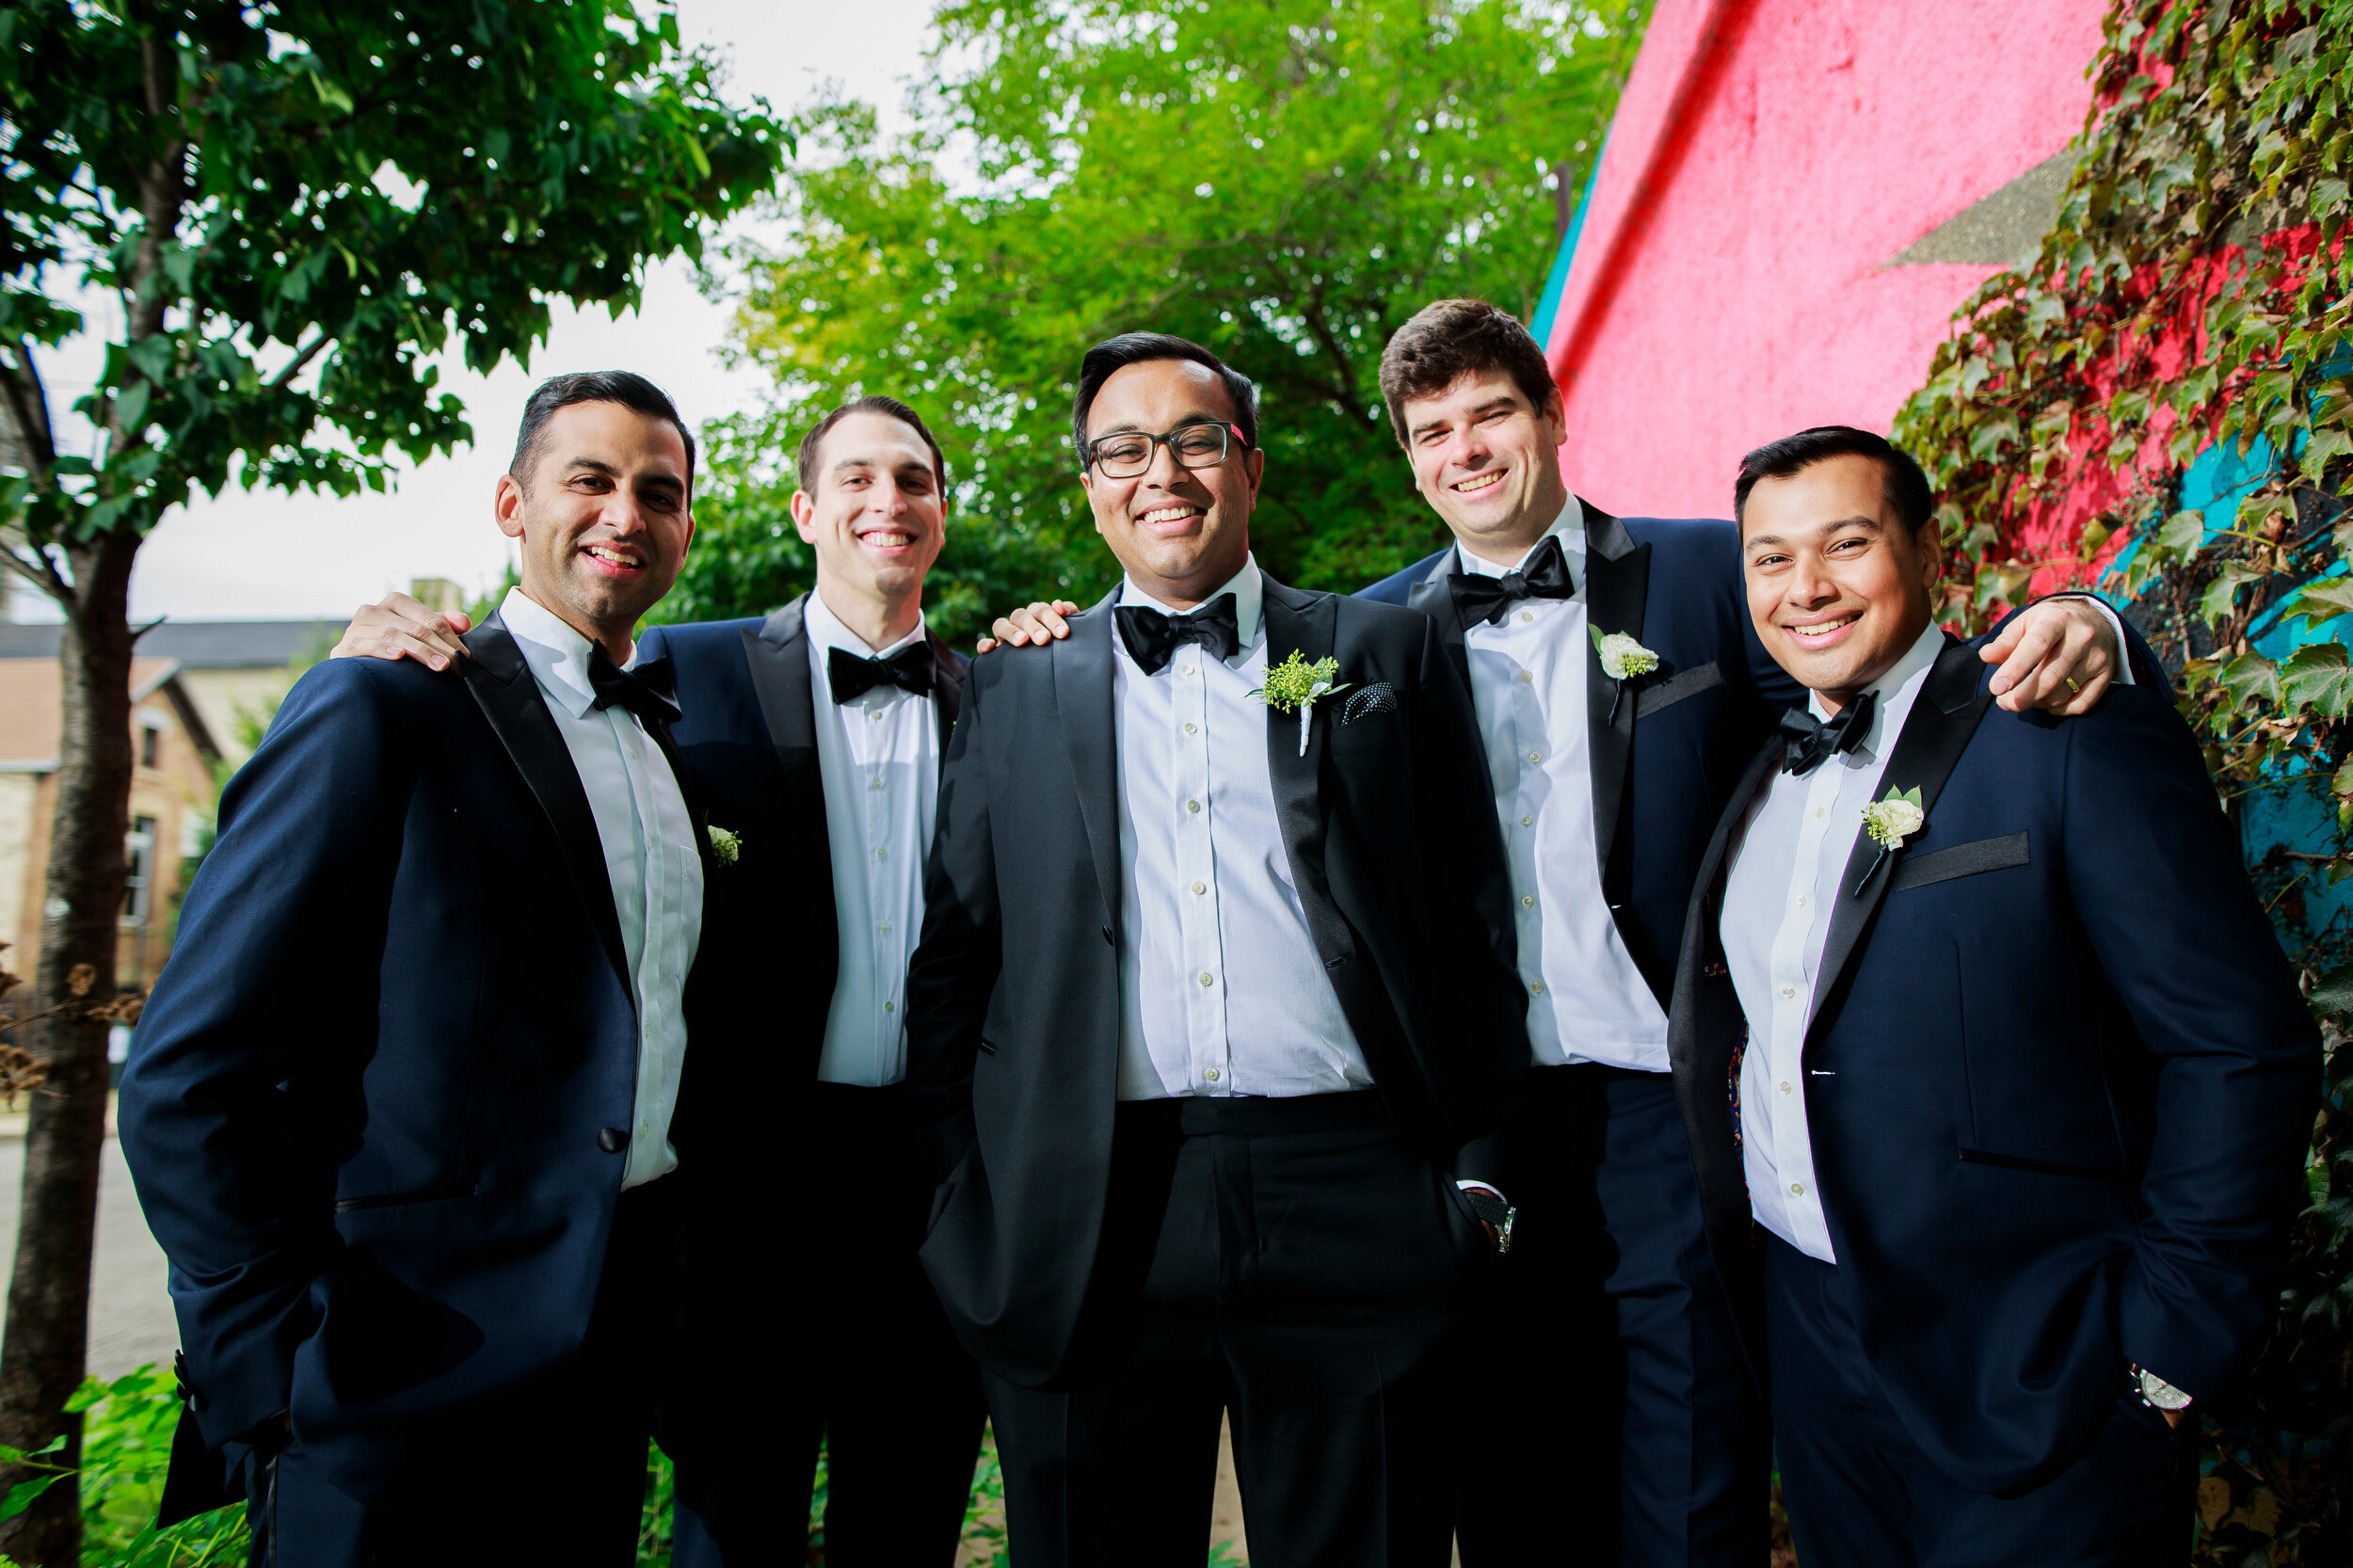 Fun groomsmen portrait in Pilsen: Geraghty Chicago wedding photography captured by J. Brown Photography.